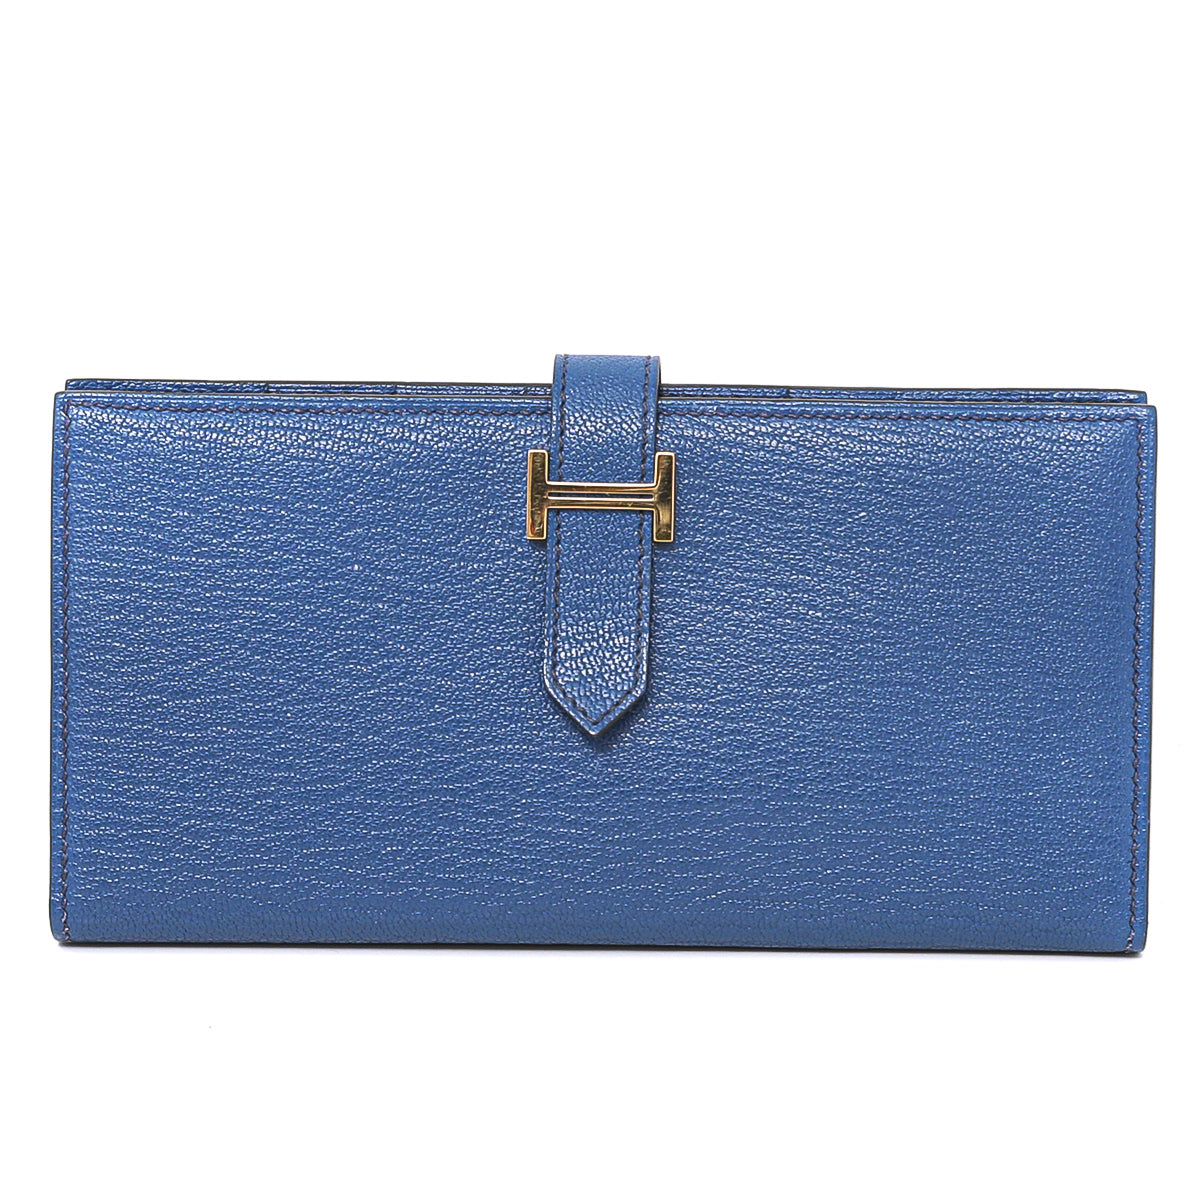 Hermes Bleu De Galice Bearn Classic Wallet